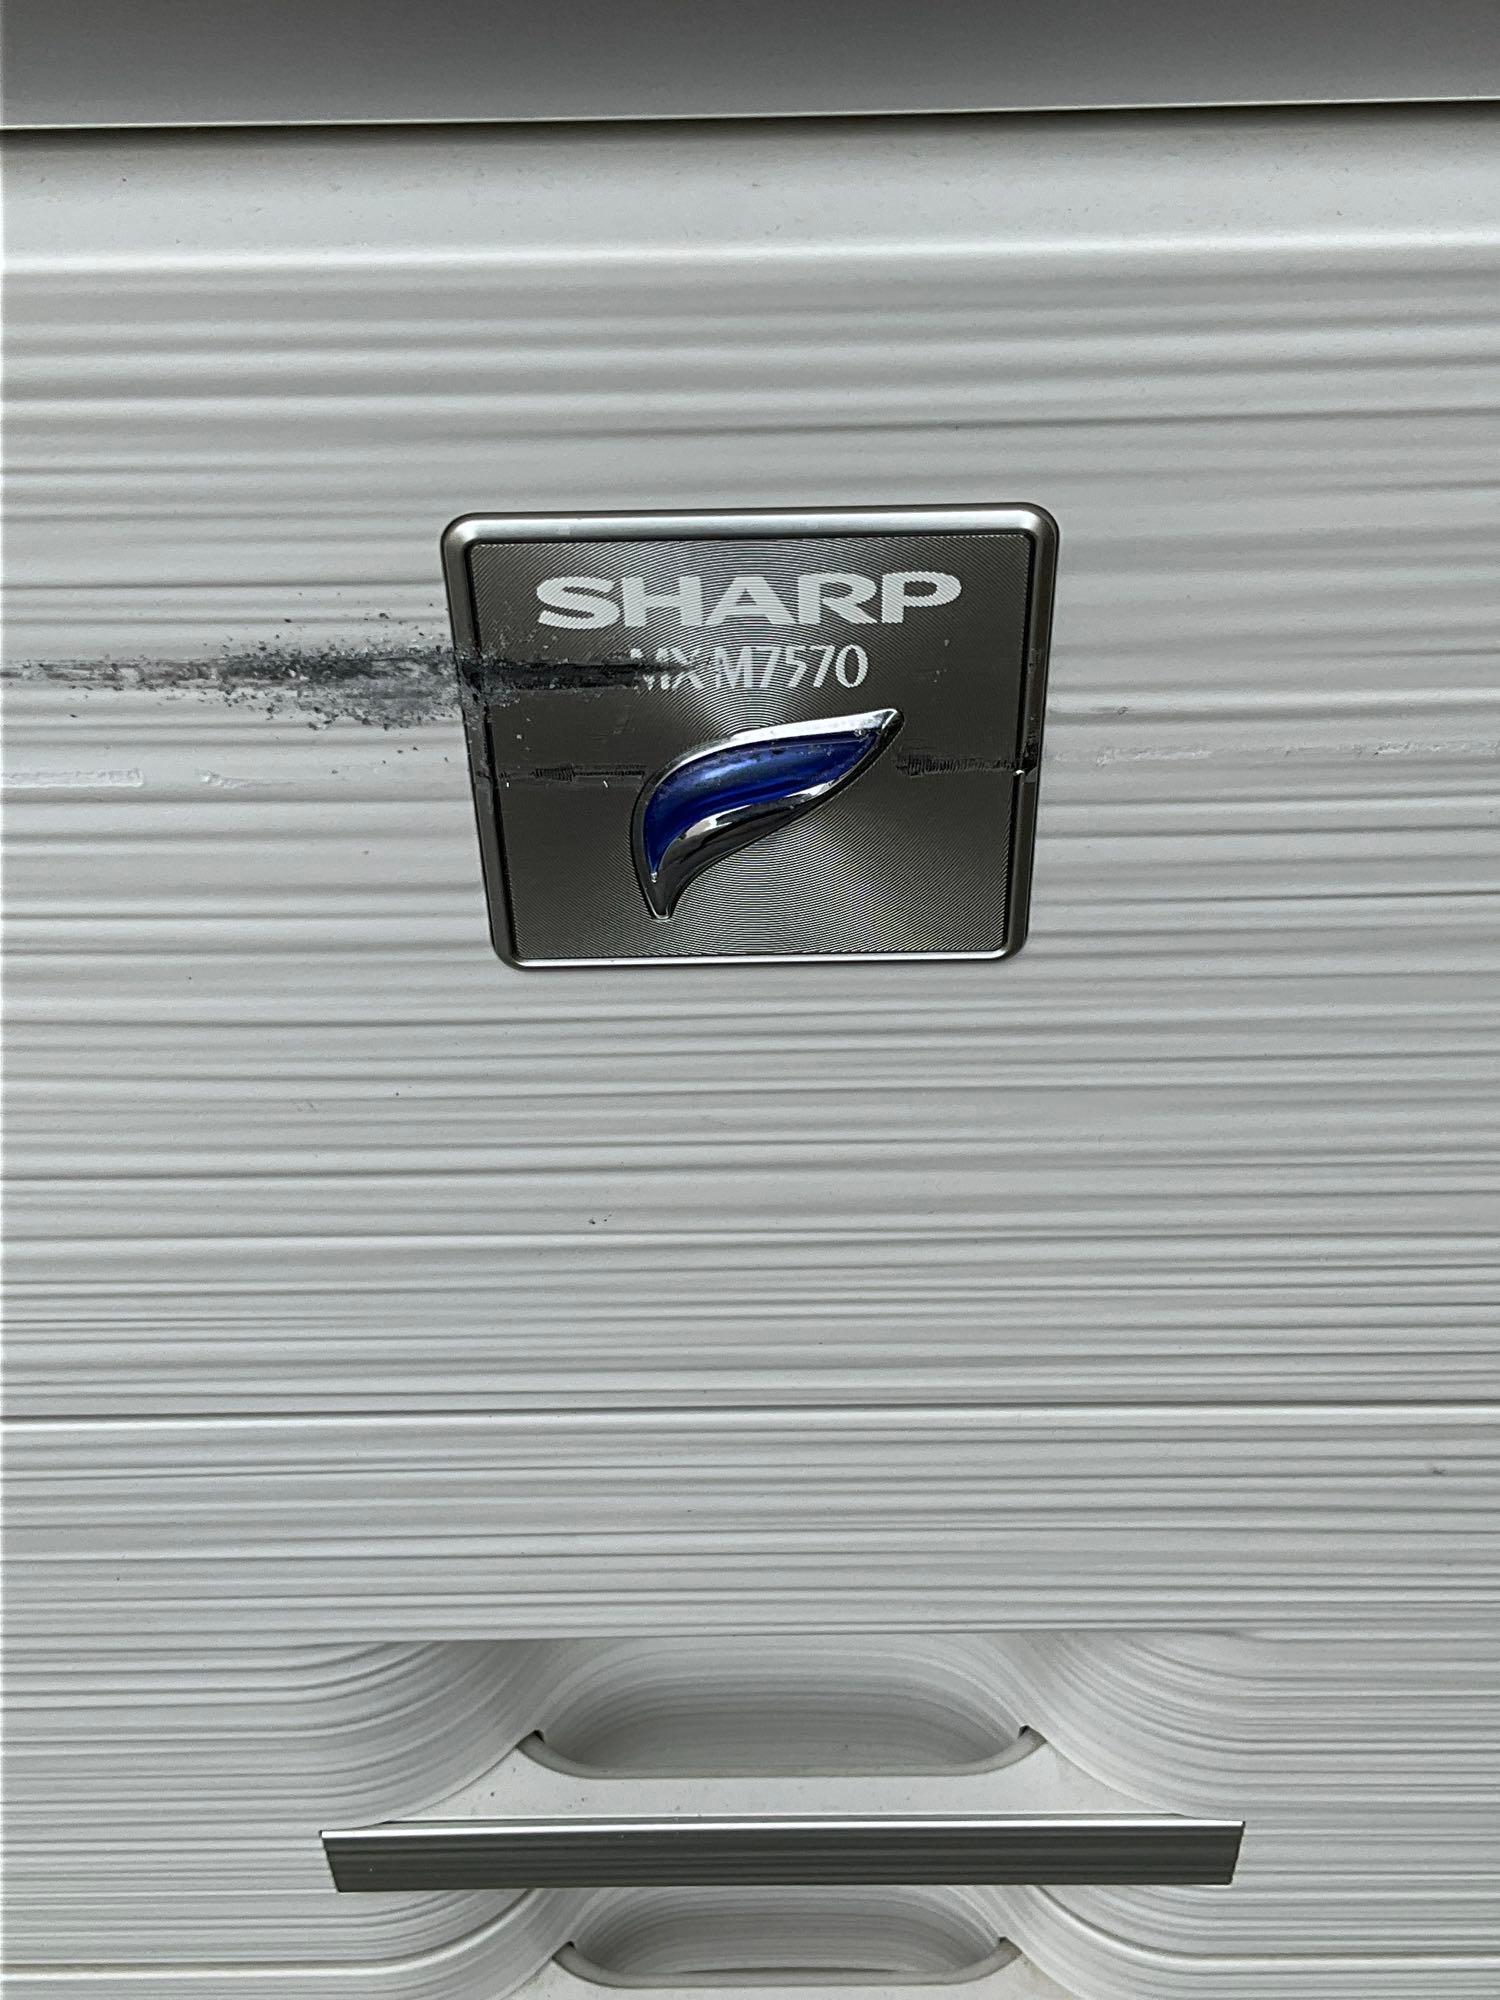 SHARP PRINTER DIGITAL MULTIFUNCTIONAL SYSTEM MODEL MX-M7570 WITH SHARP FINISHER: SHARP TRANSIENT